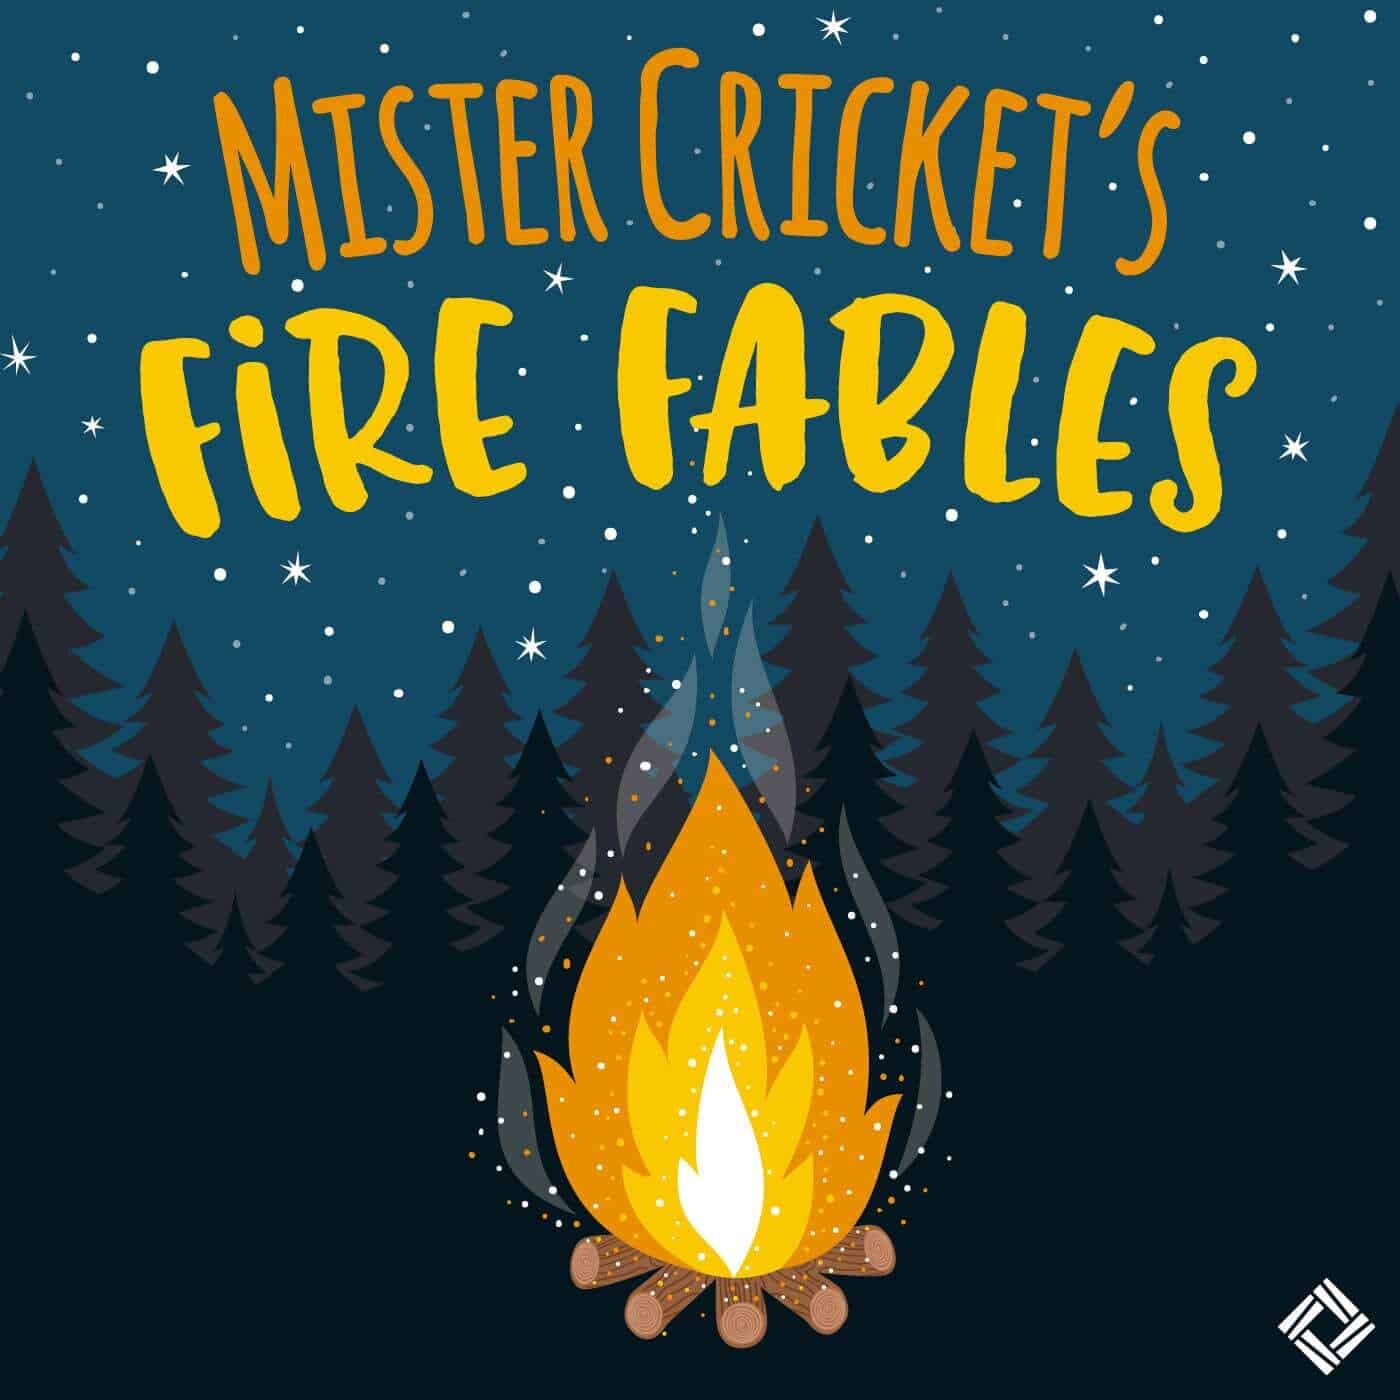 Mister-Crickets-Podcast-Artwork_watermark.jpg